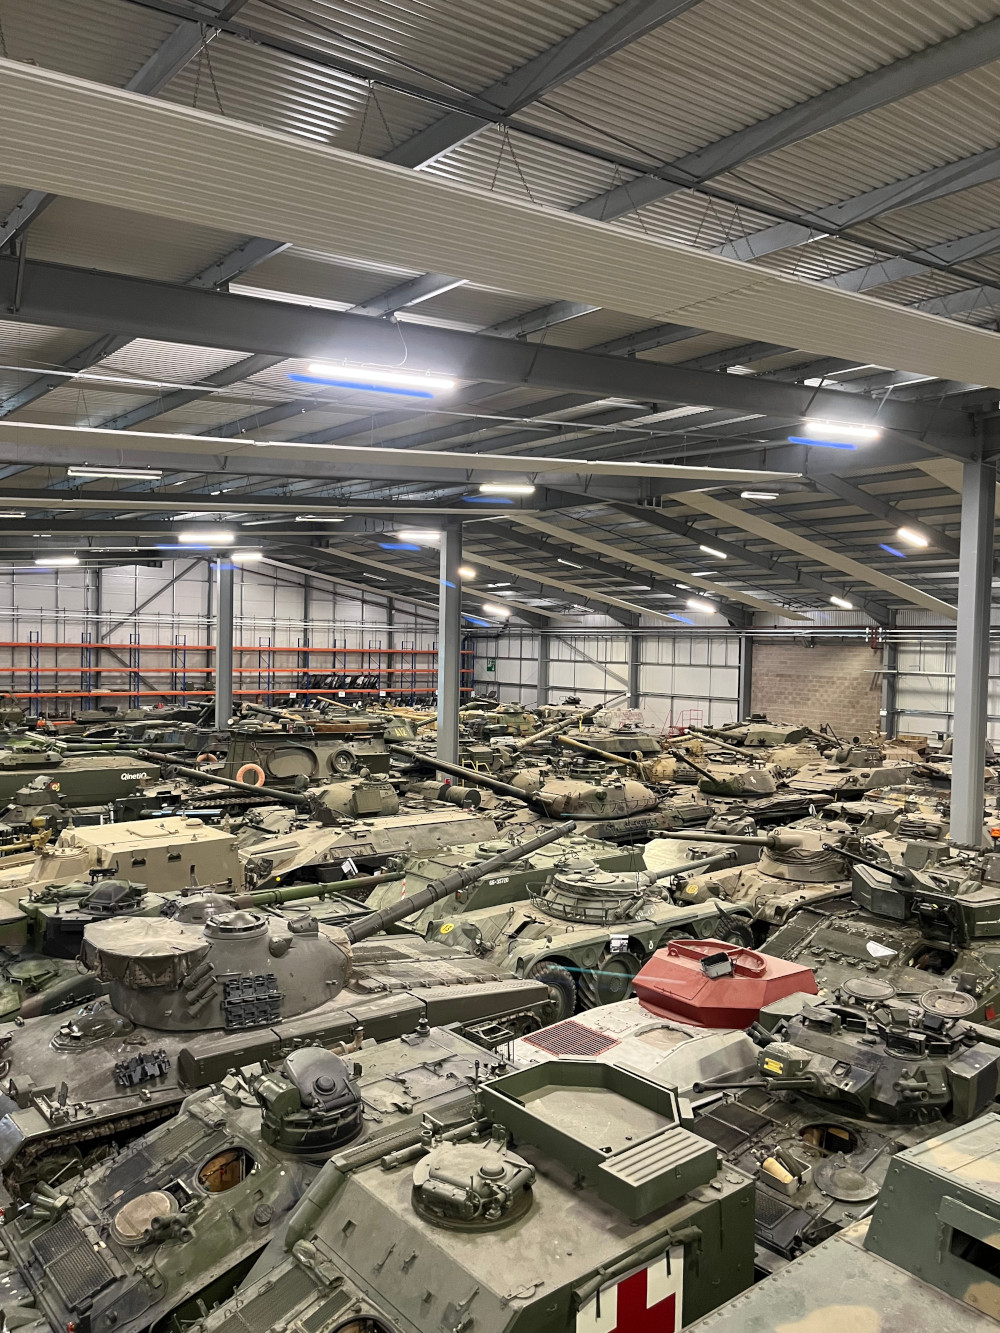 The Restoration Room at Bovington Tank Museum